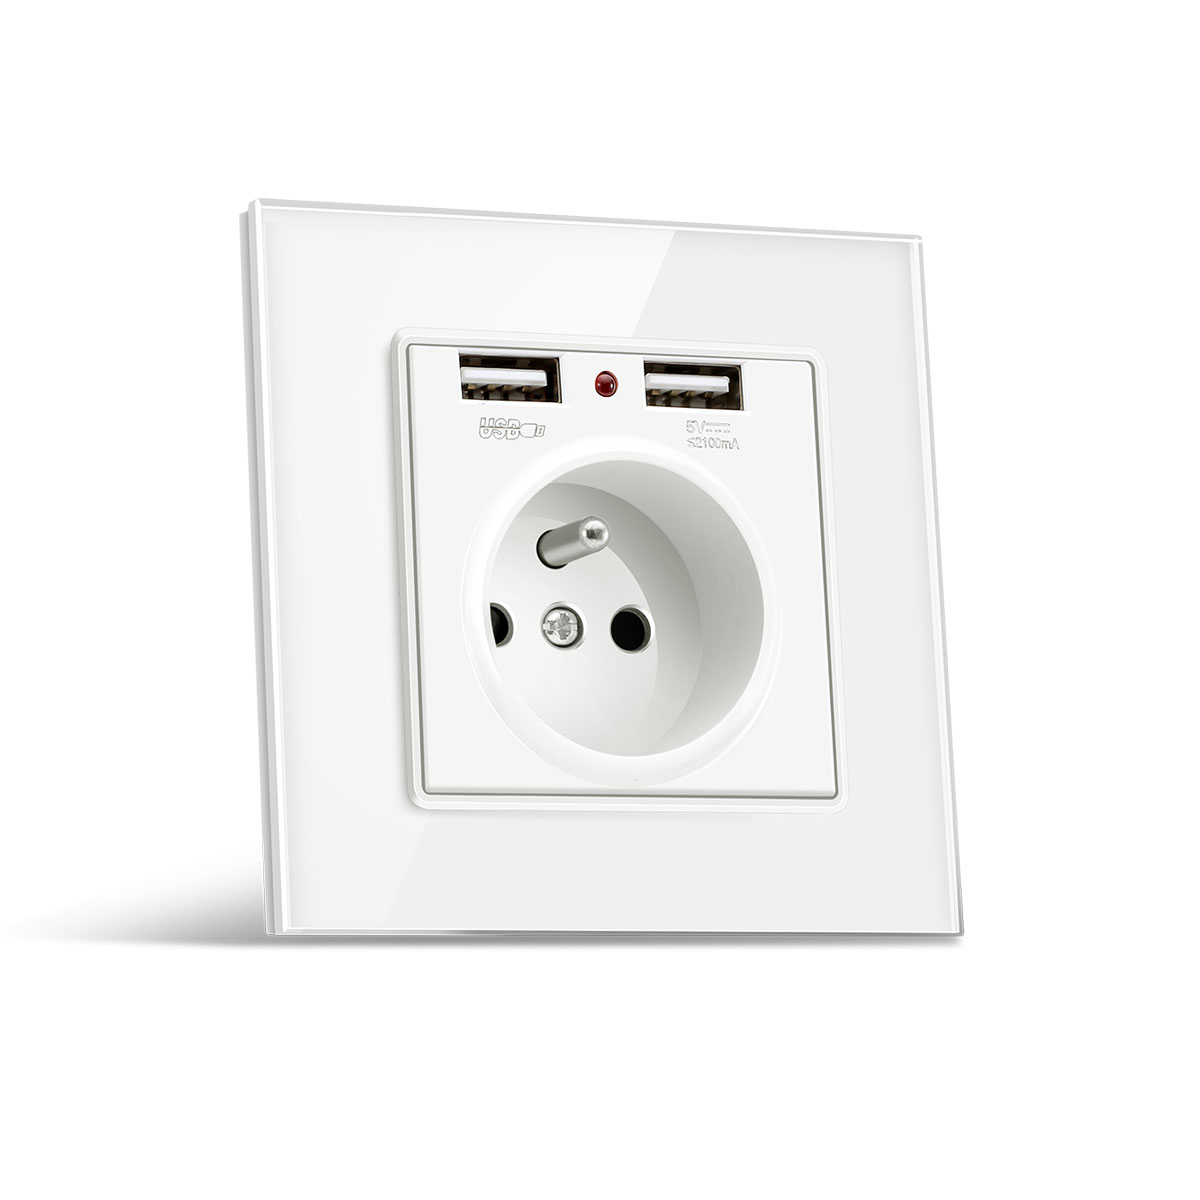 BONDA-Socket-Switch-Dual-USB-8686-PC-Glass-Panel-Eu-German-France-Plug-Wall-Socket-Smart-Home-Series-1735999-6